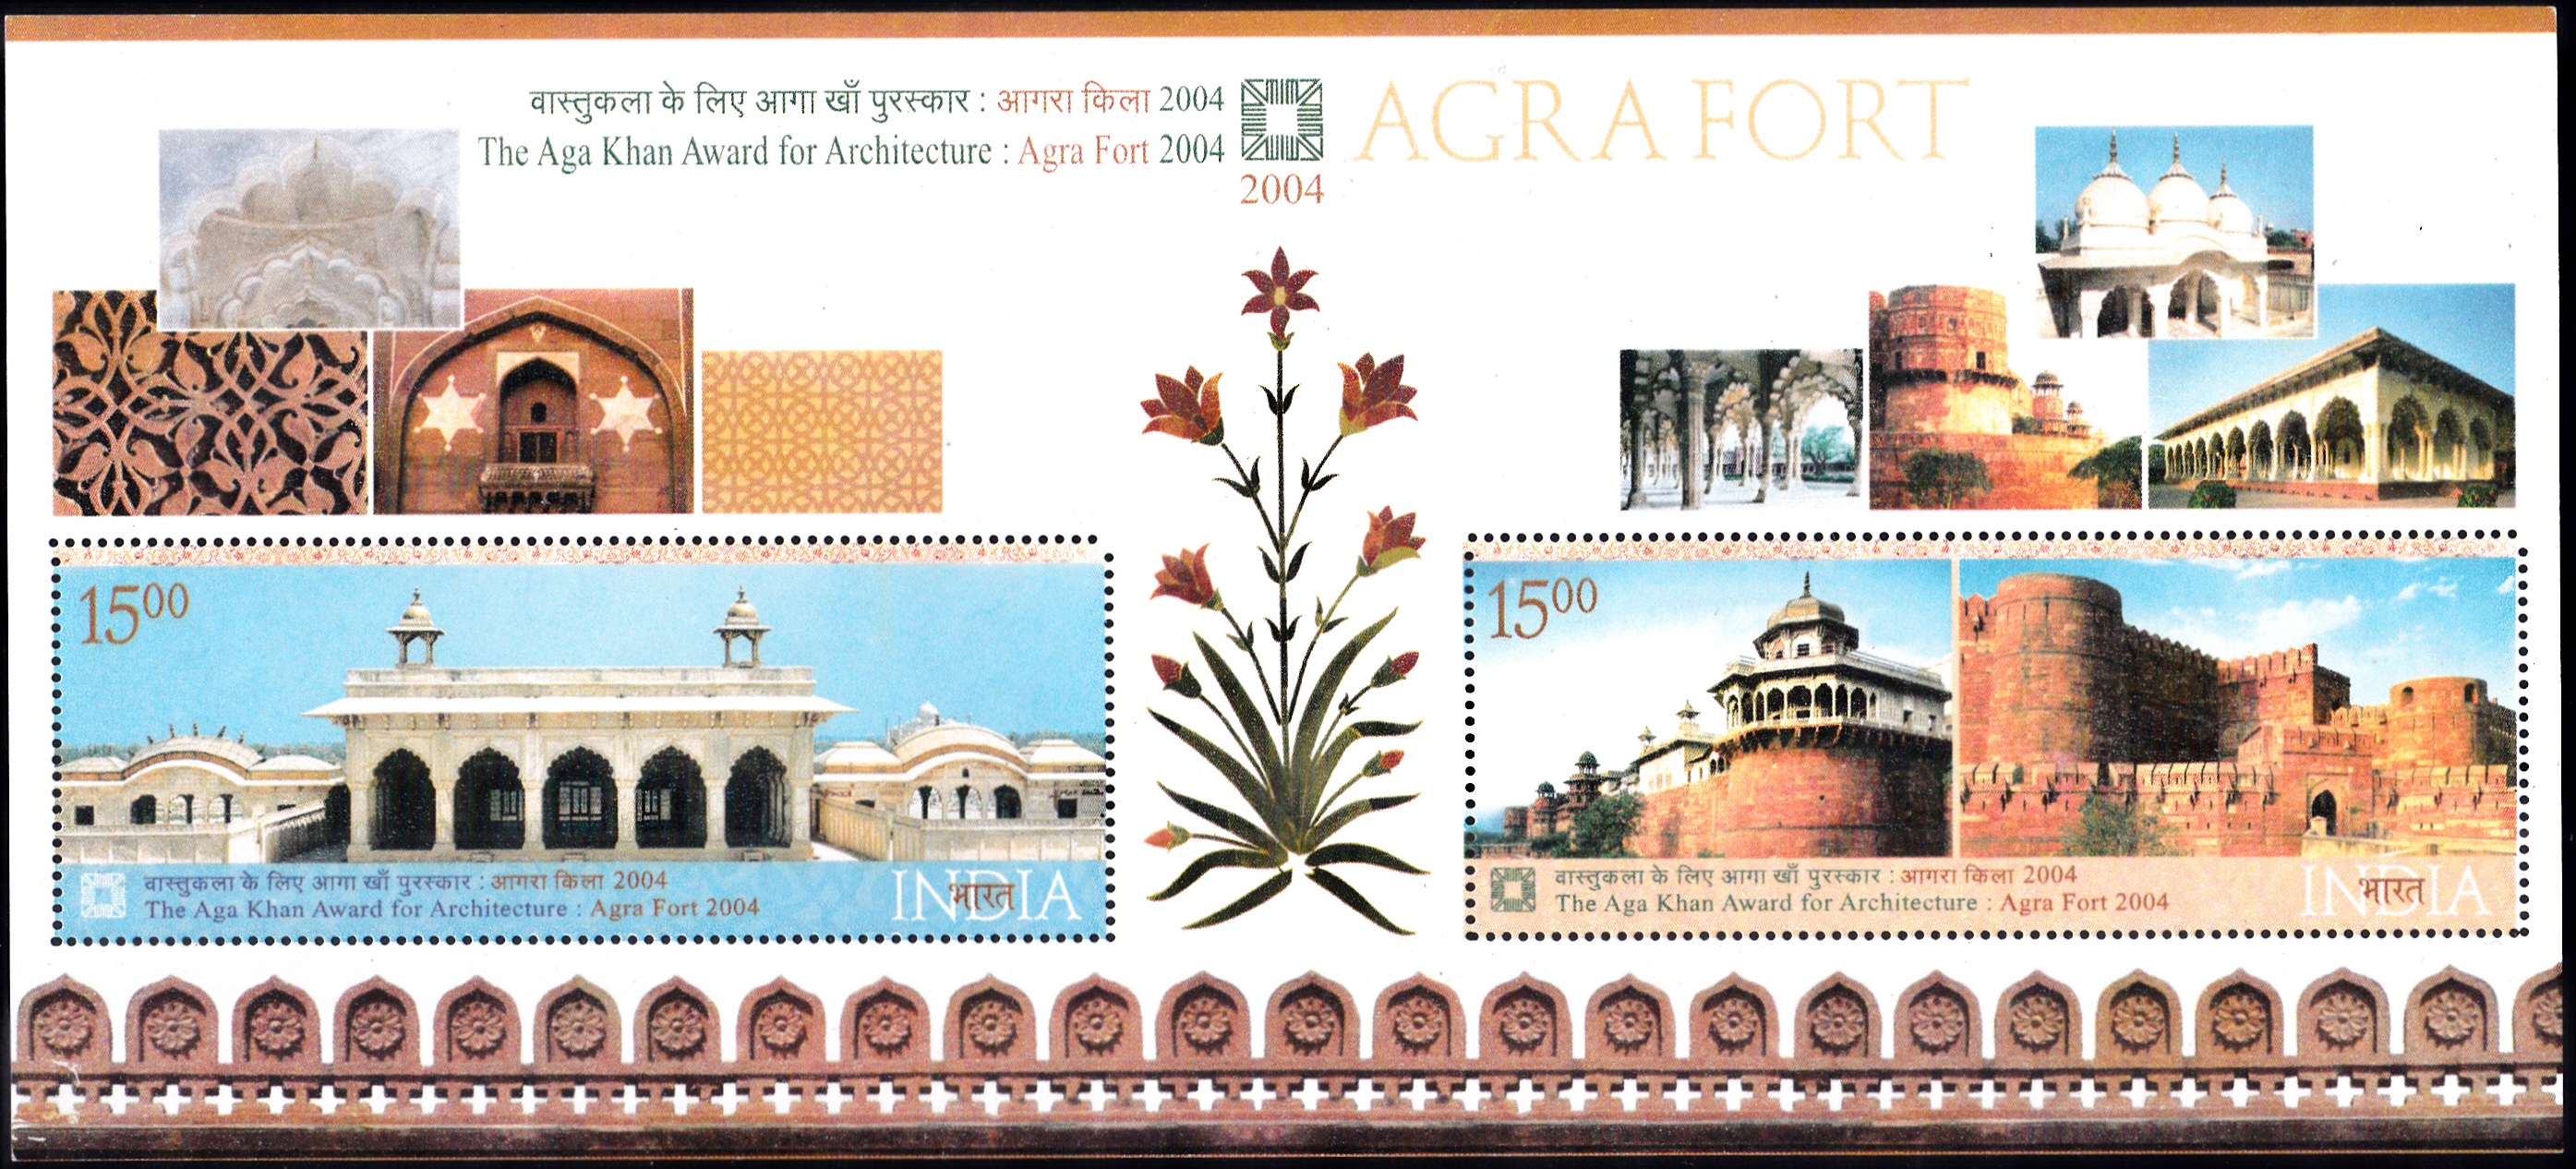 Khas Mahal, Musamman Burj & Amar Singh Gate (Agra Fort)